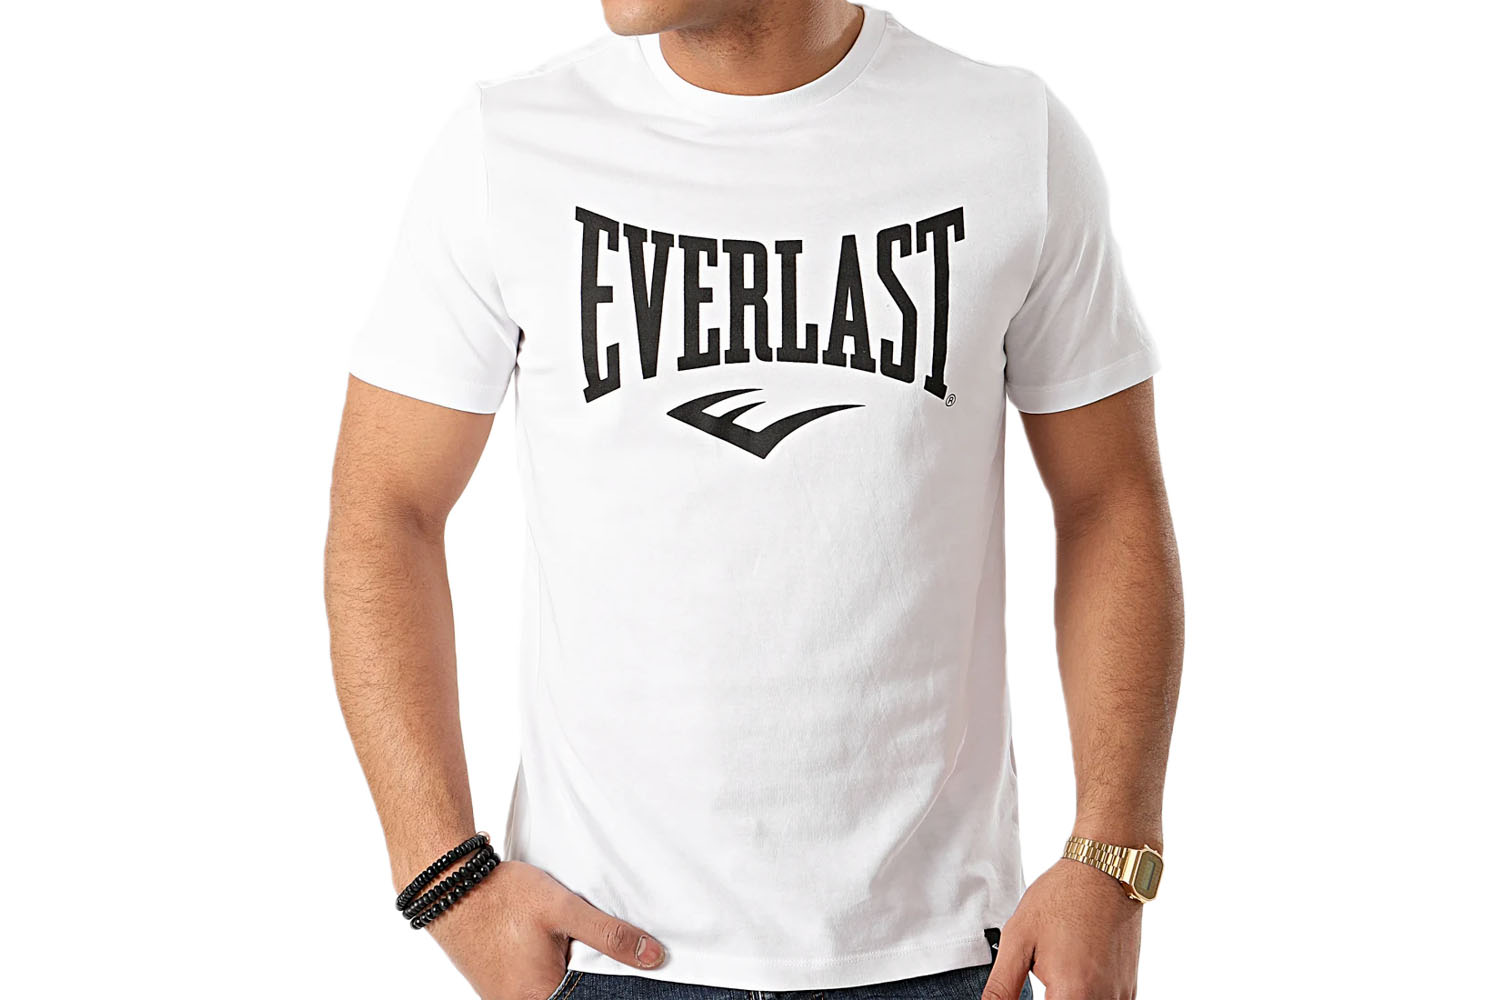 Sports t-shirt - Everlast 2020, Everlast 